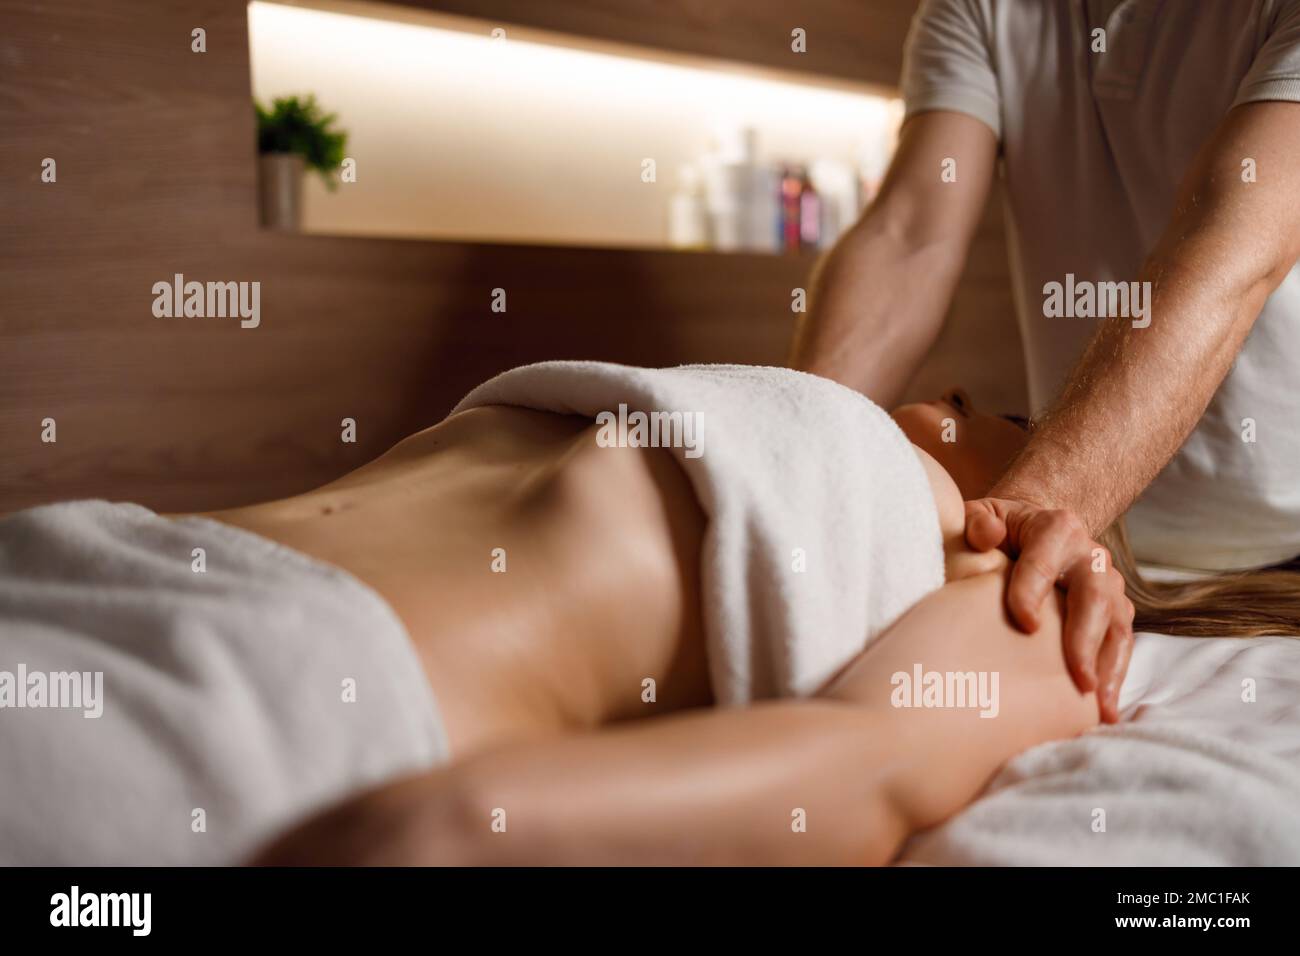 https://c8.alamy.com/comp/2MC1FAK/masseur-massaging-womans-shoulders-in-spa-salon-2MC1FAK.jpg